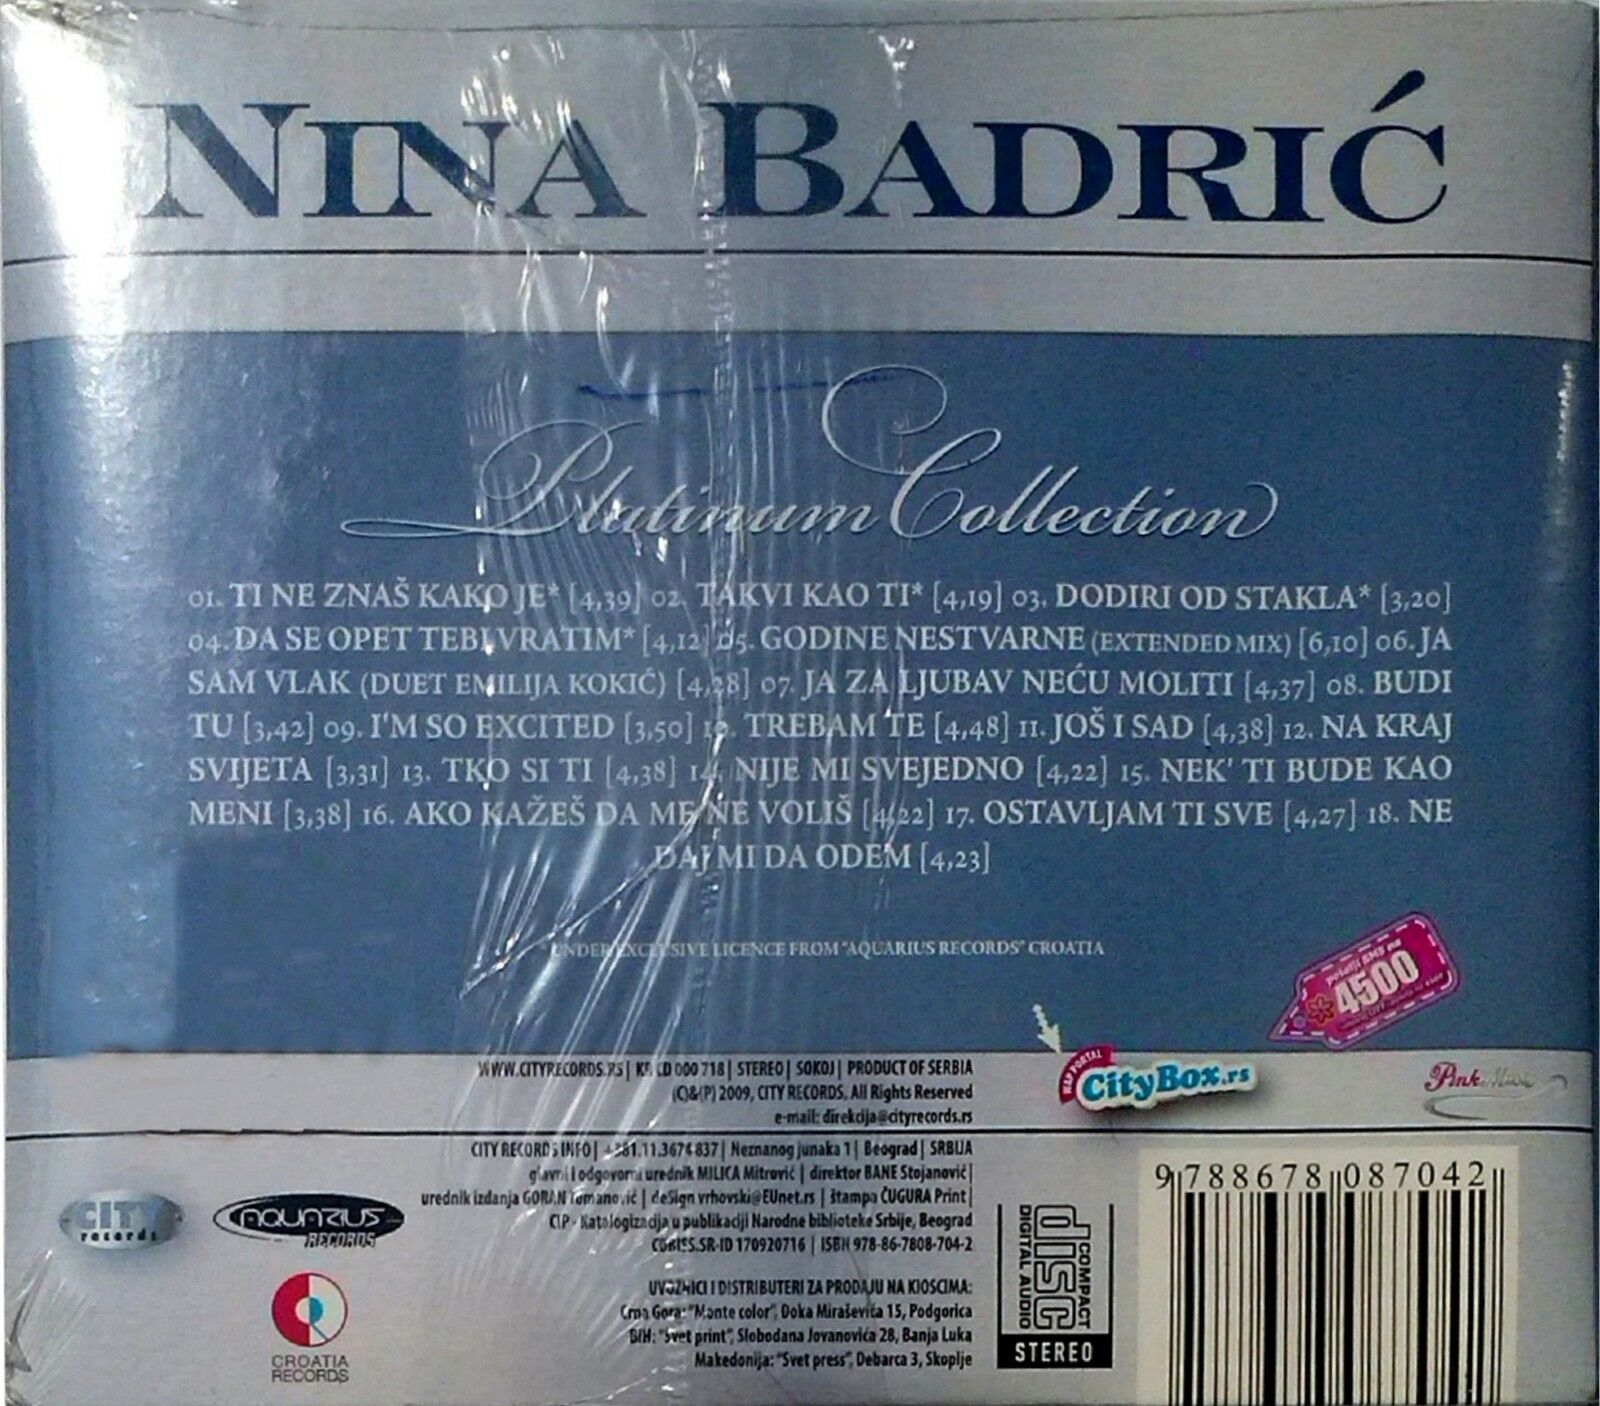 Harlan Grand Electric Fireplace Inspirational Details Zu Cd Nina Badric the Platinum Collection 2009 Digipak Serbia City Records